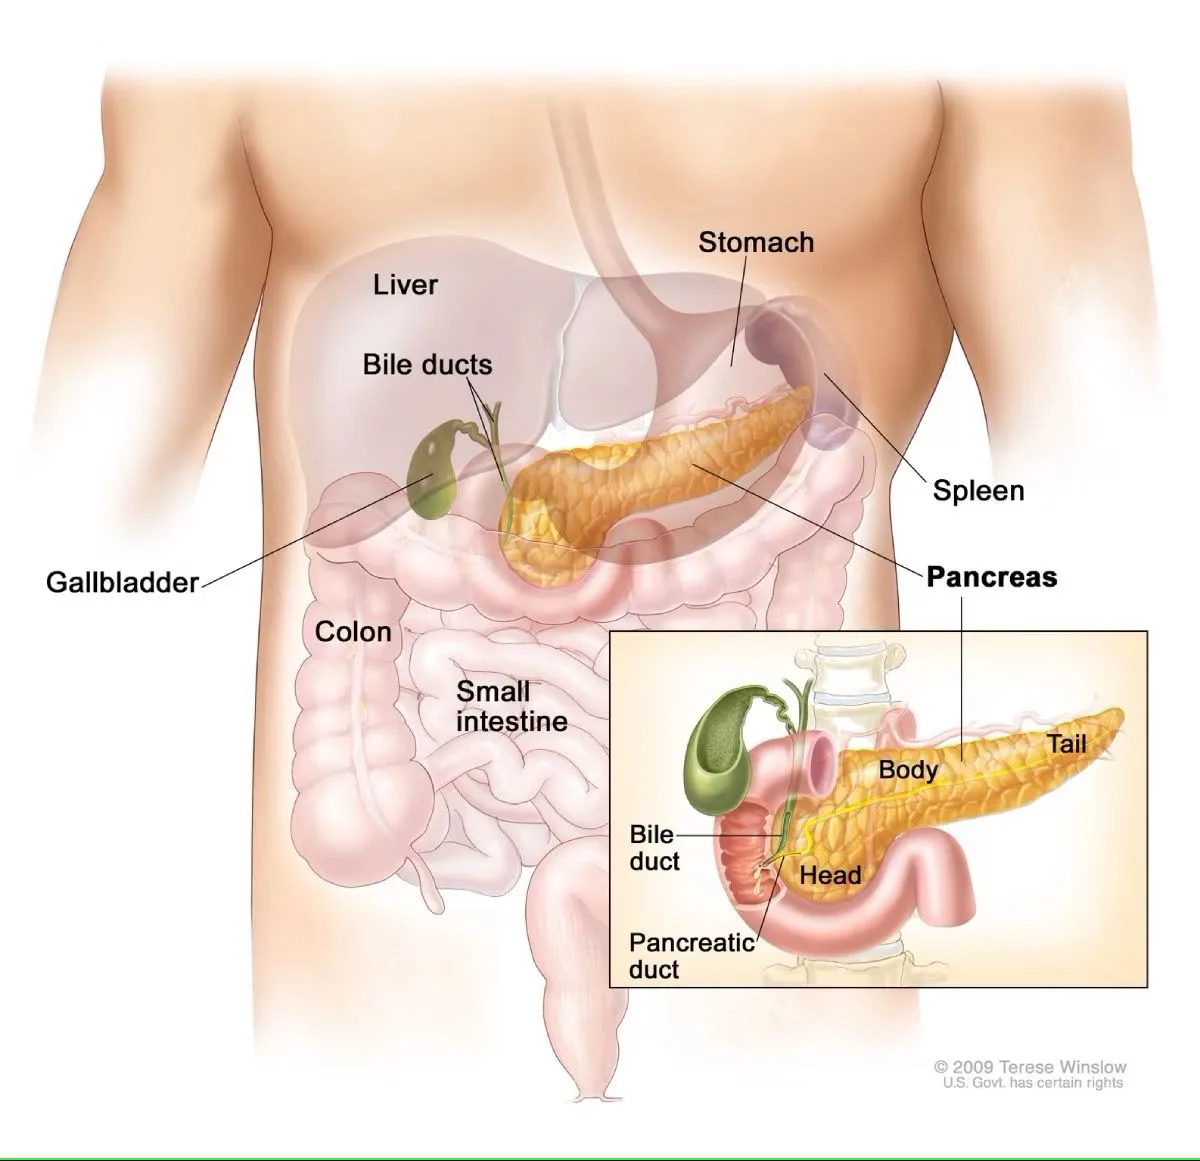 pancreas illustration